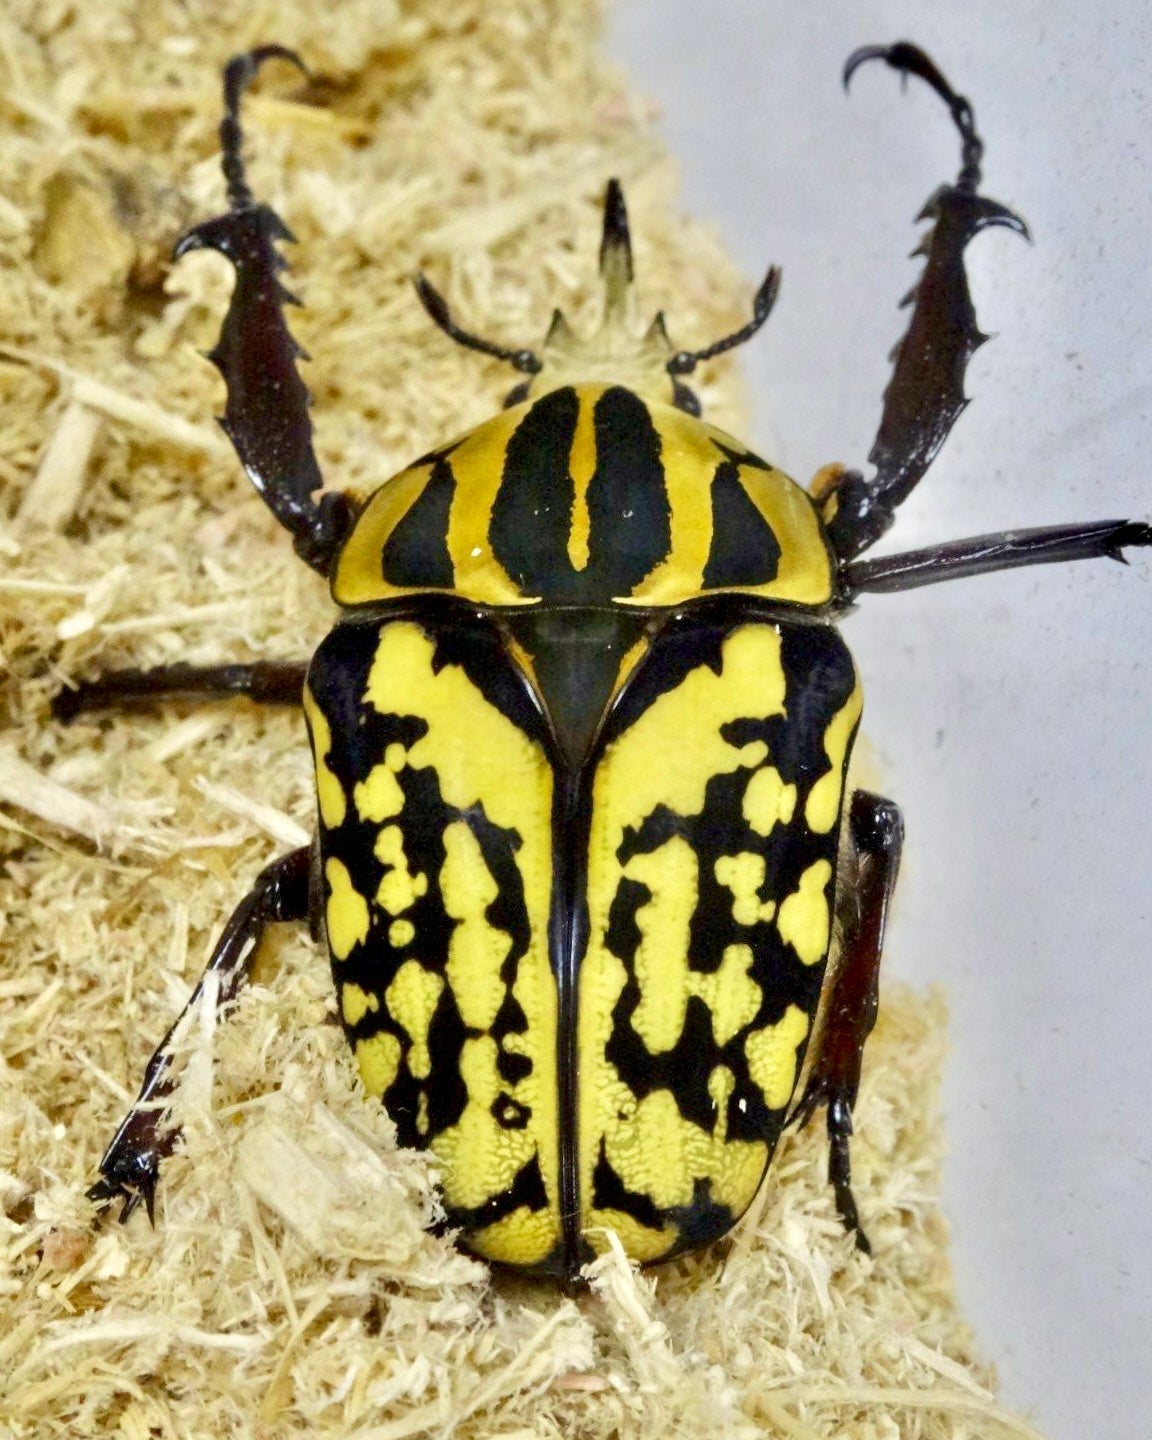 Larvae - "Electric" Tiger Flower Beetle, (Mecynorrhina oberthuri) - Richard’s Inverts